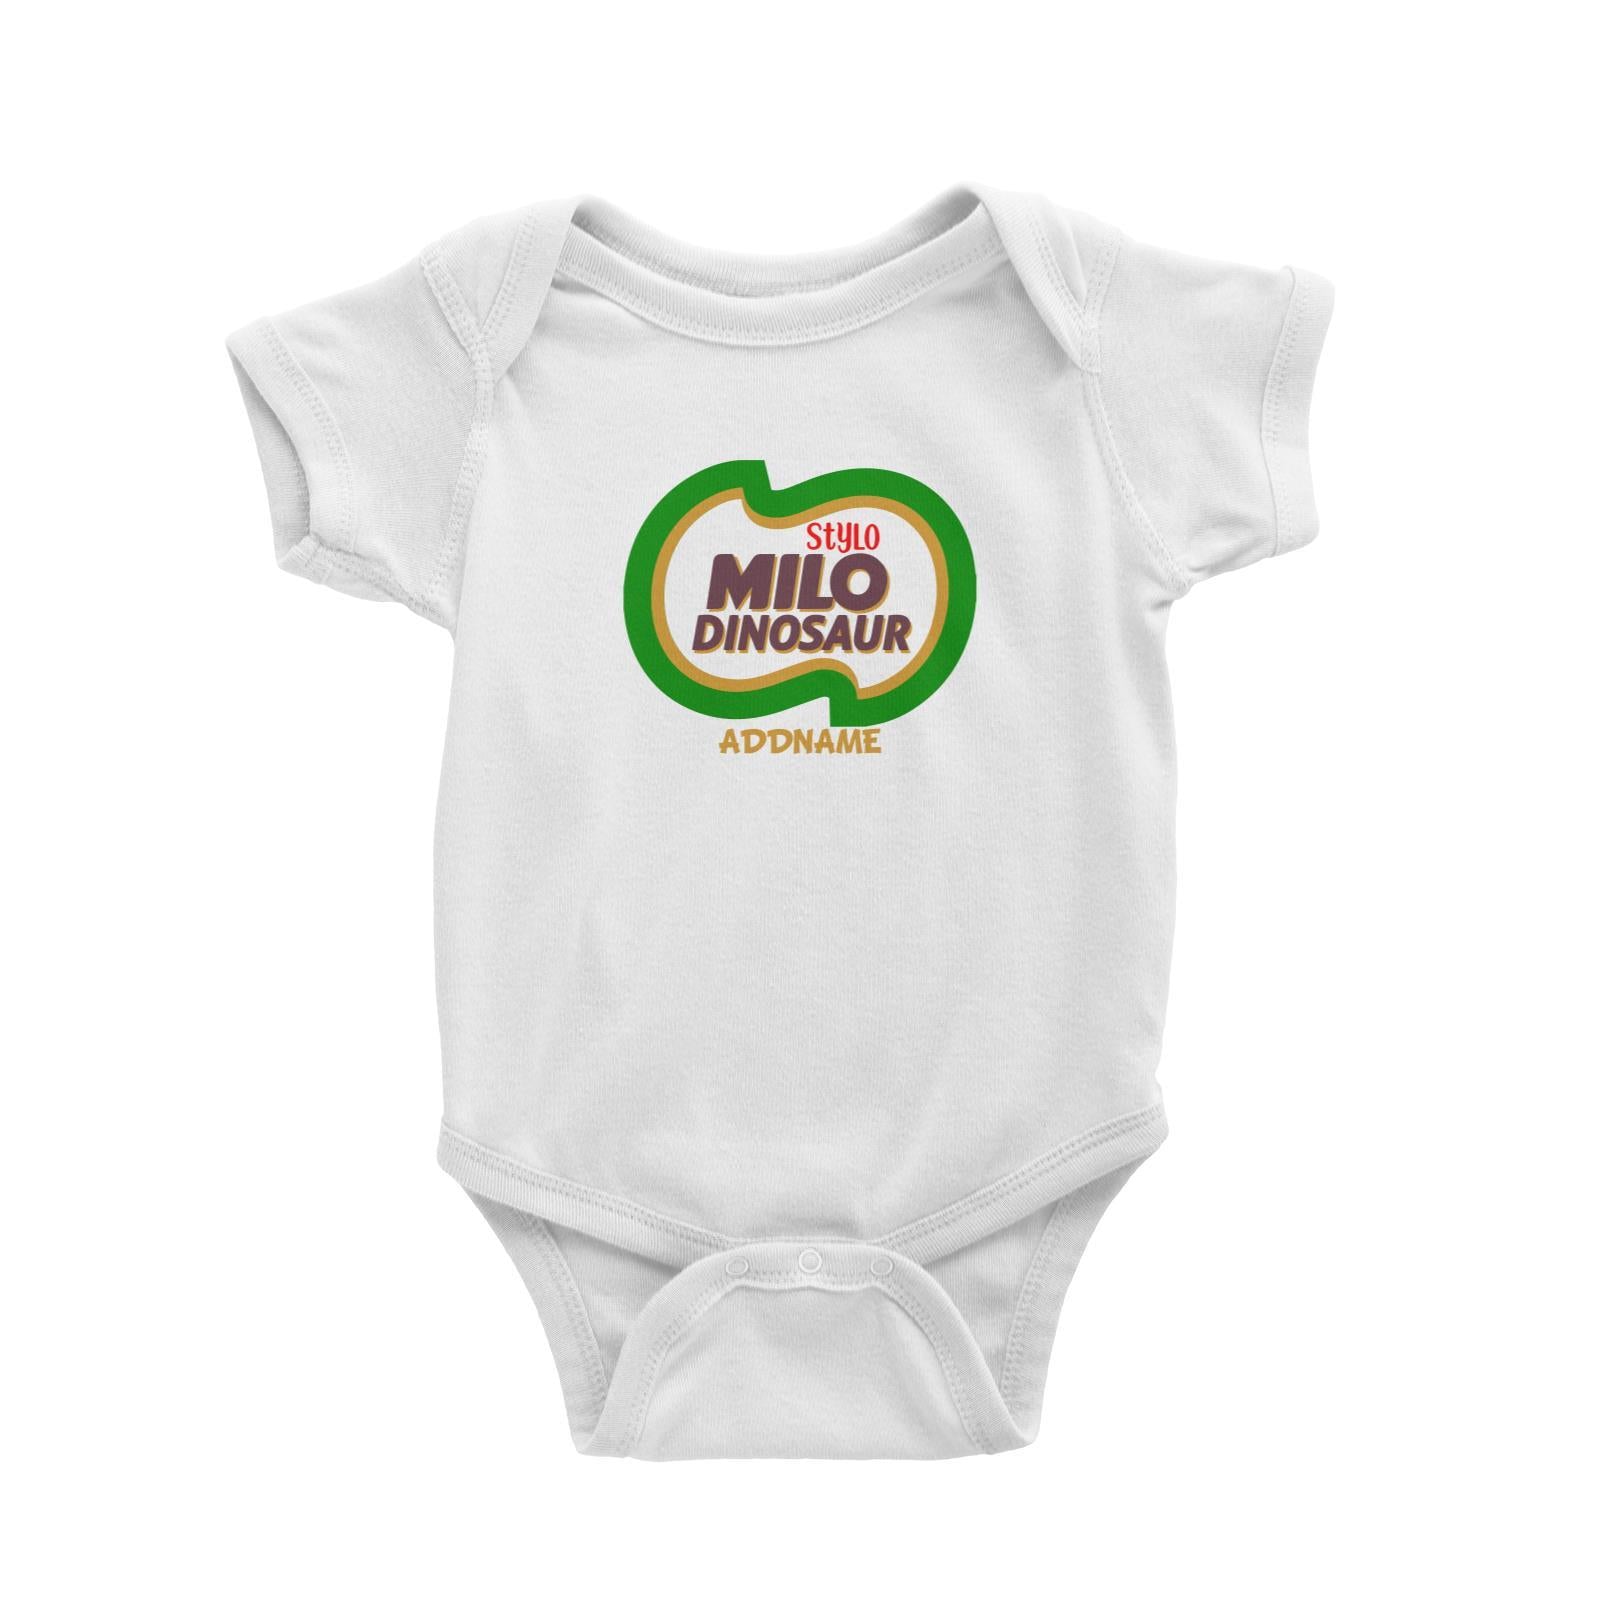 Stylo Milo Dinosaur Baby Romper